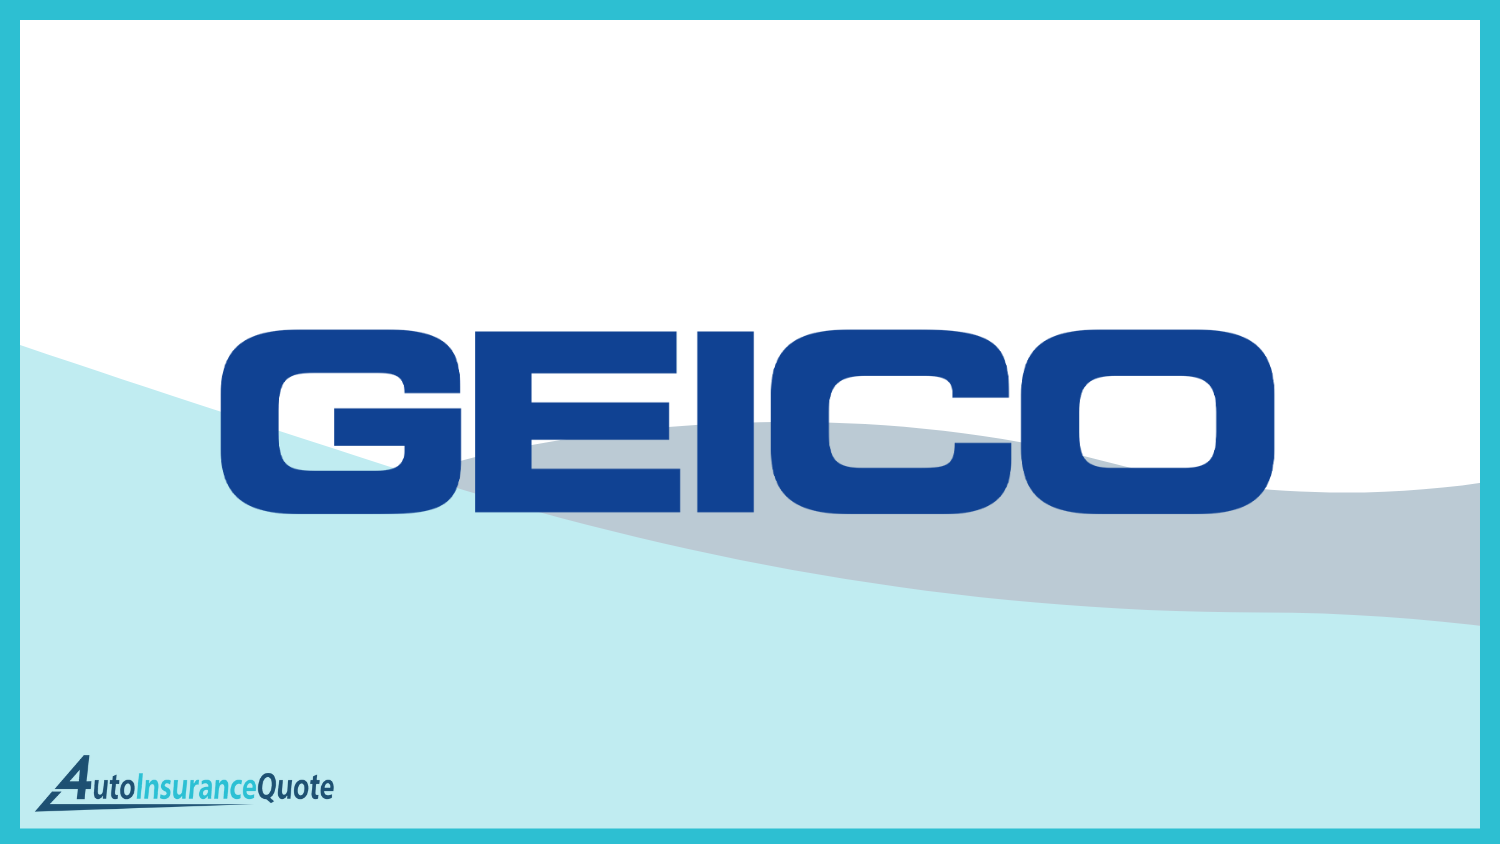 Geico: Best Auto Insurance for College Graduates